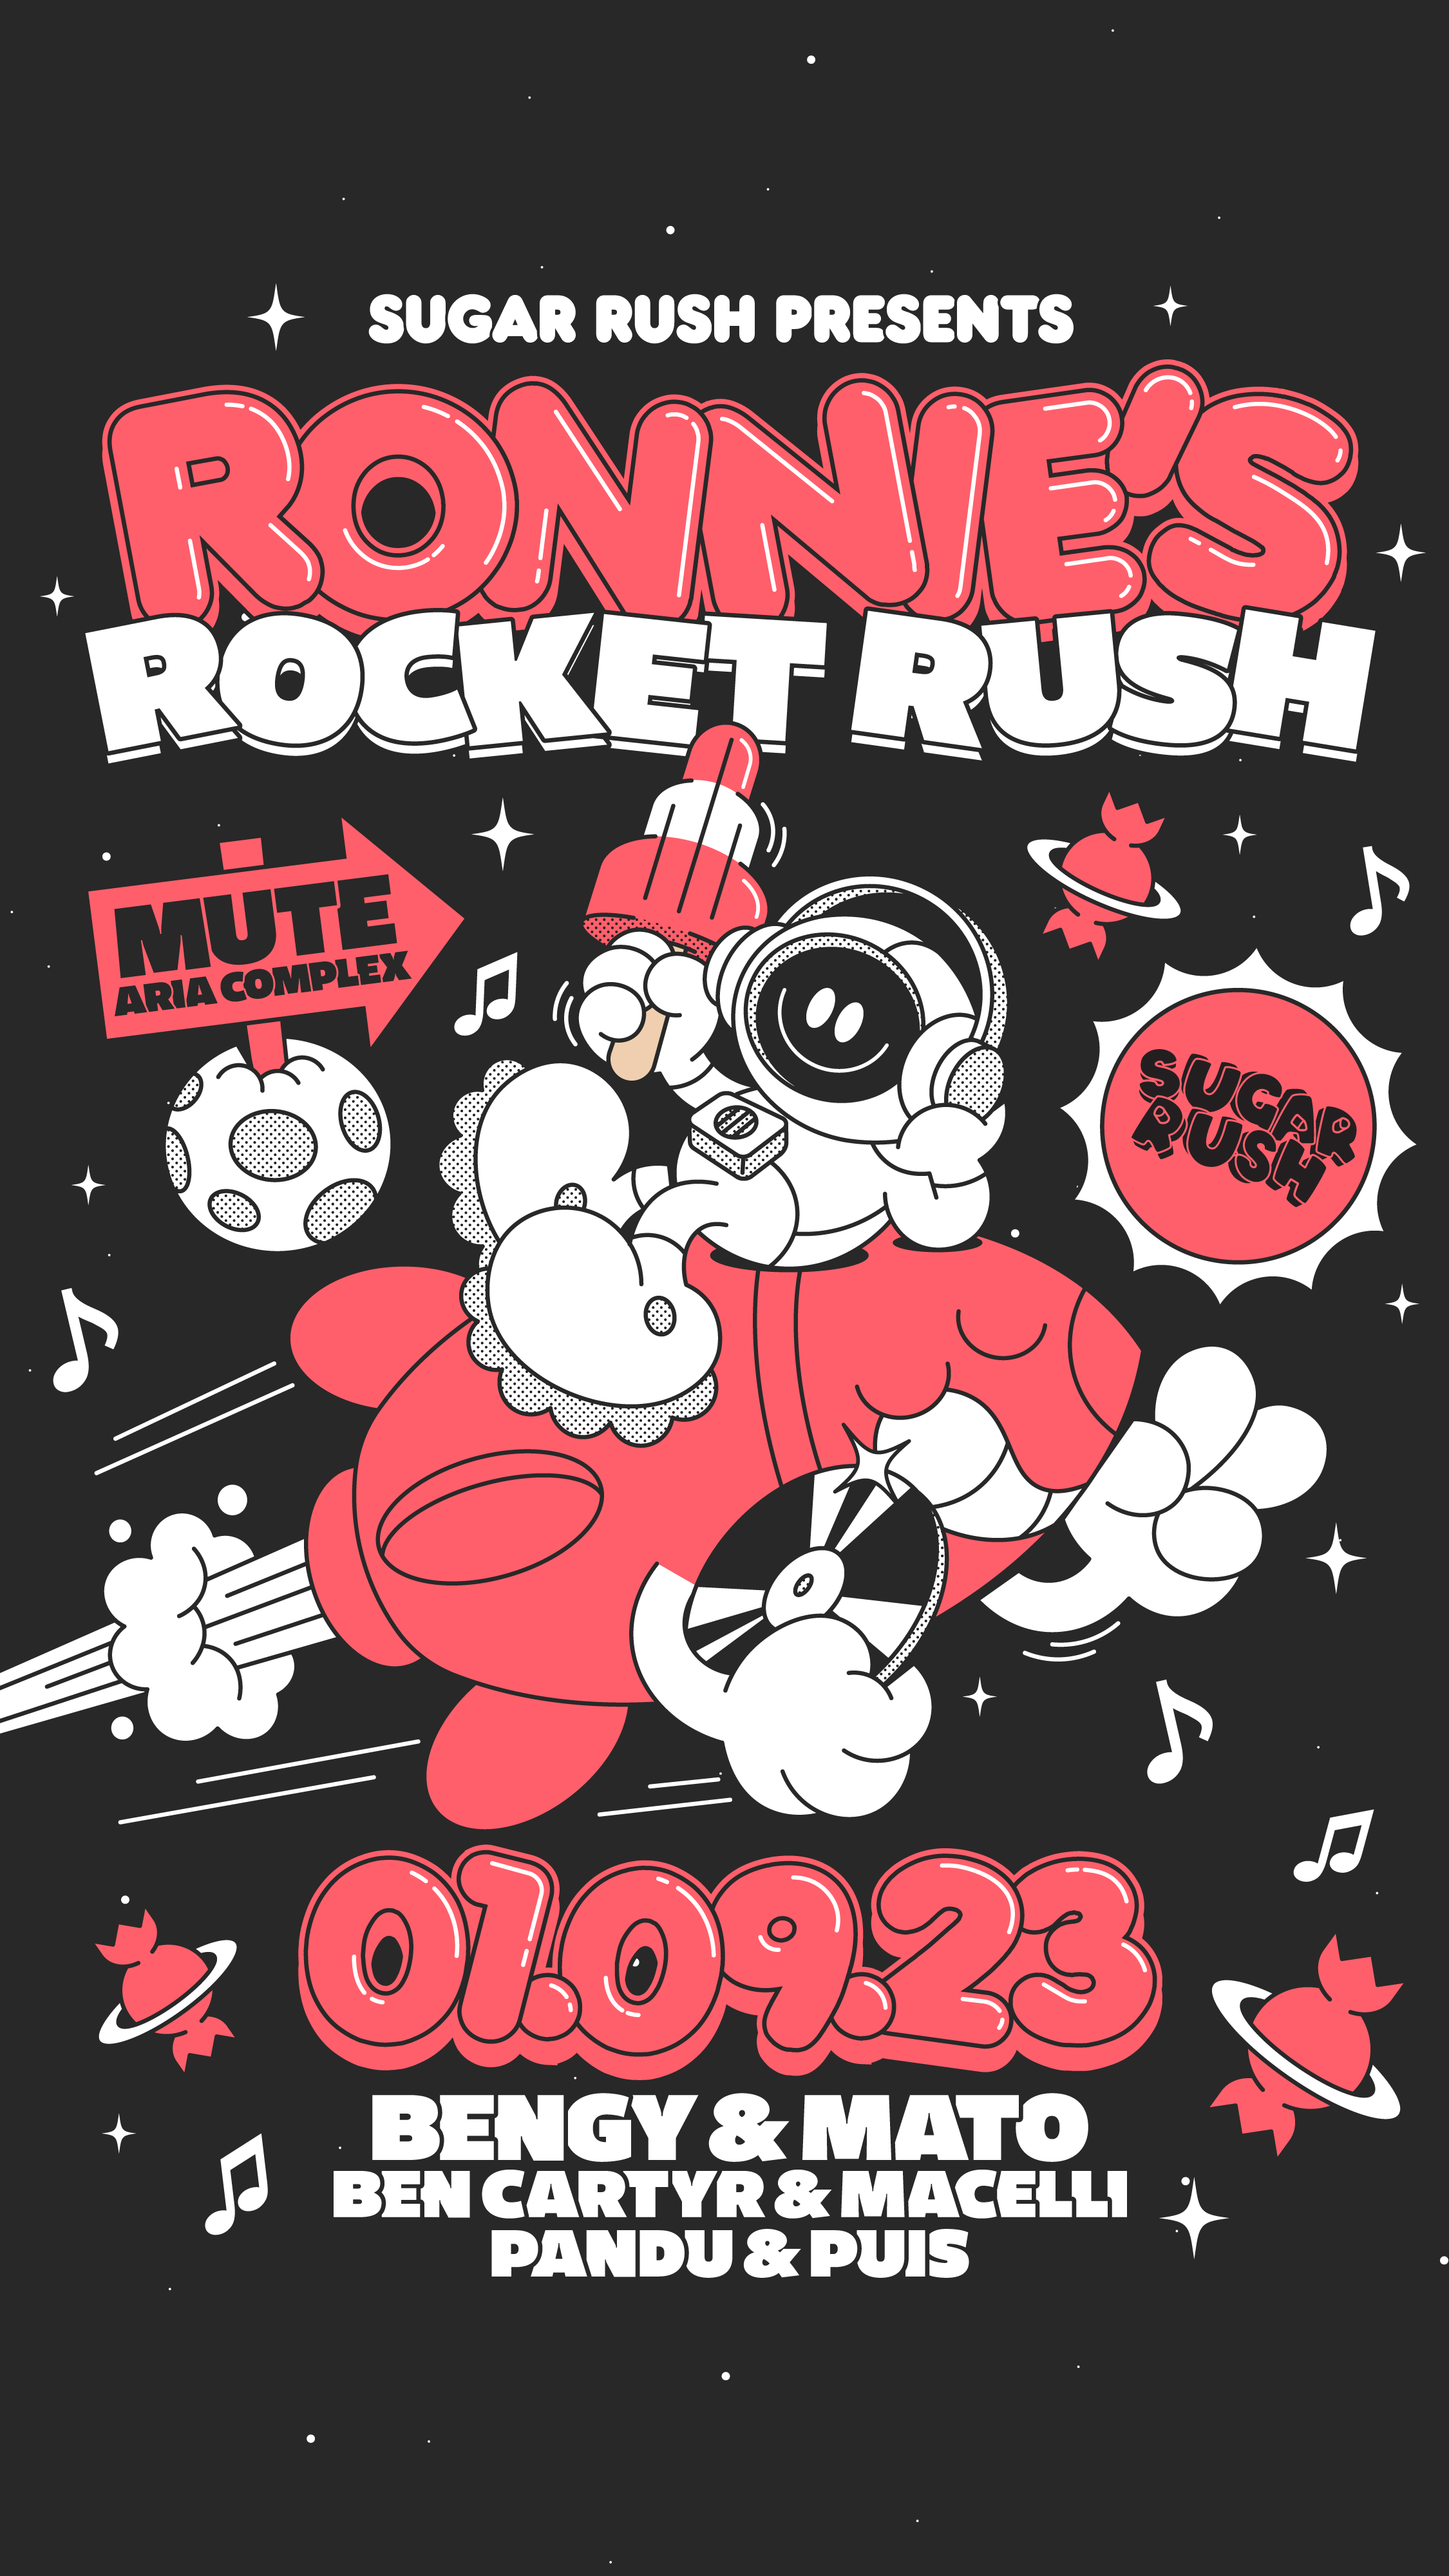 Sugar Rush presents Ronnie's Rocket Rush [01.09.23] 🚀 poster